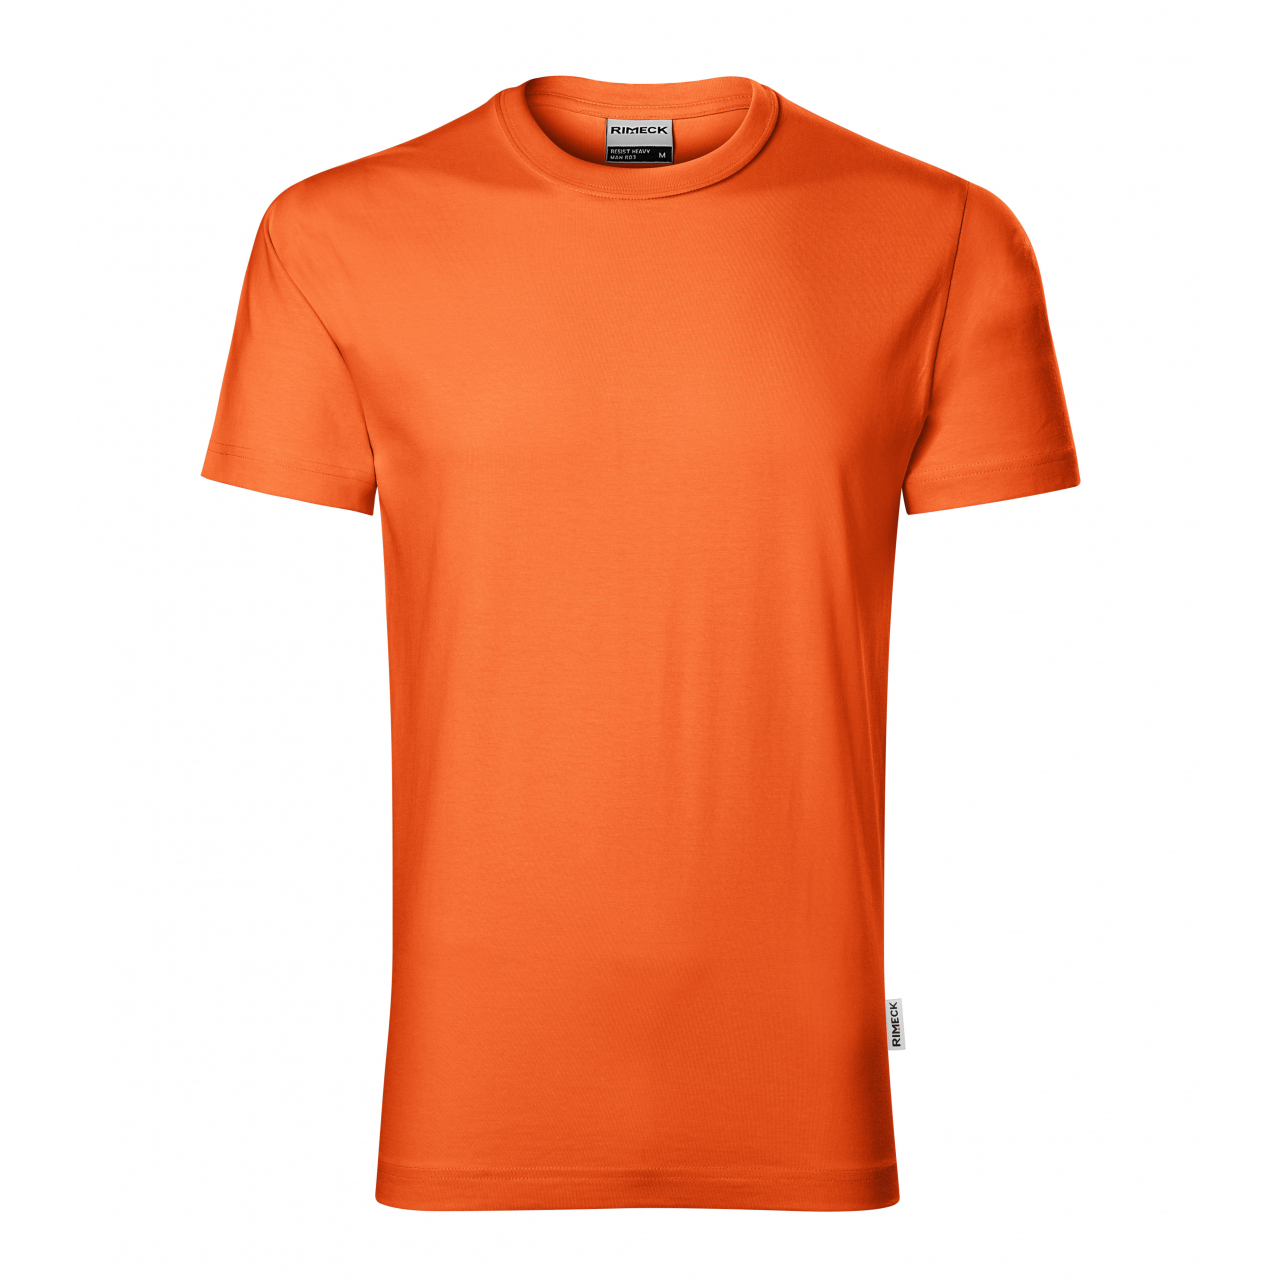 Tričko pánské Rimeck Resist Heavy BL - oranžové, XL